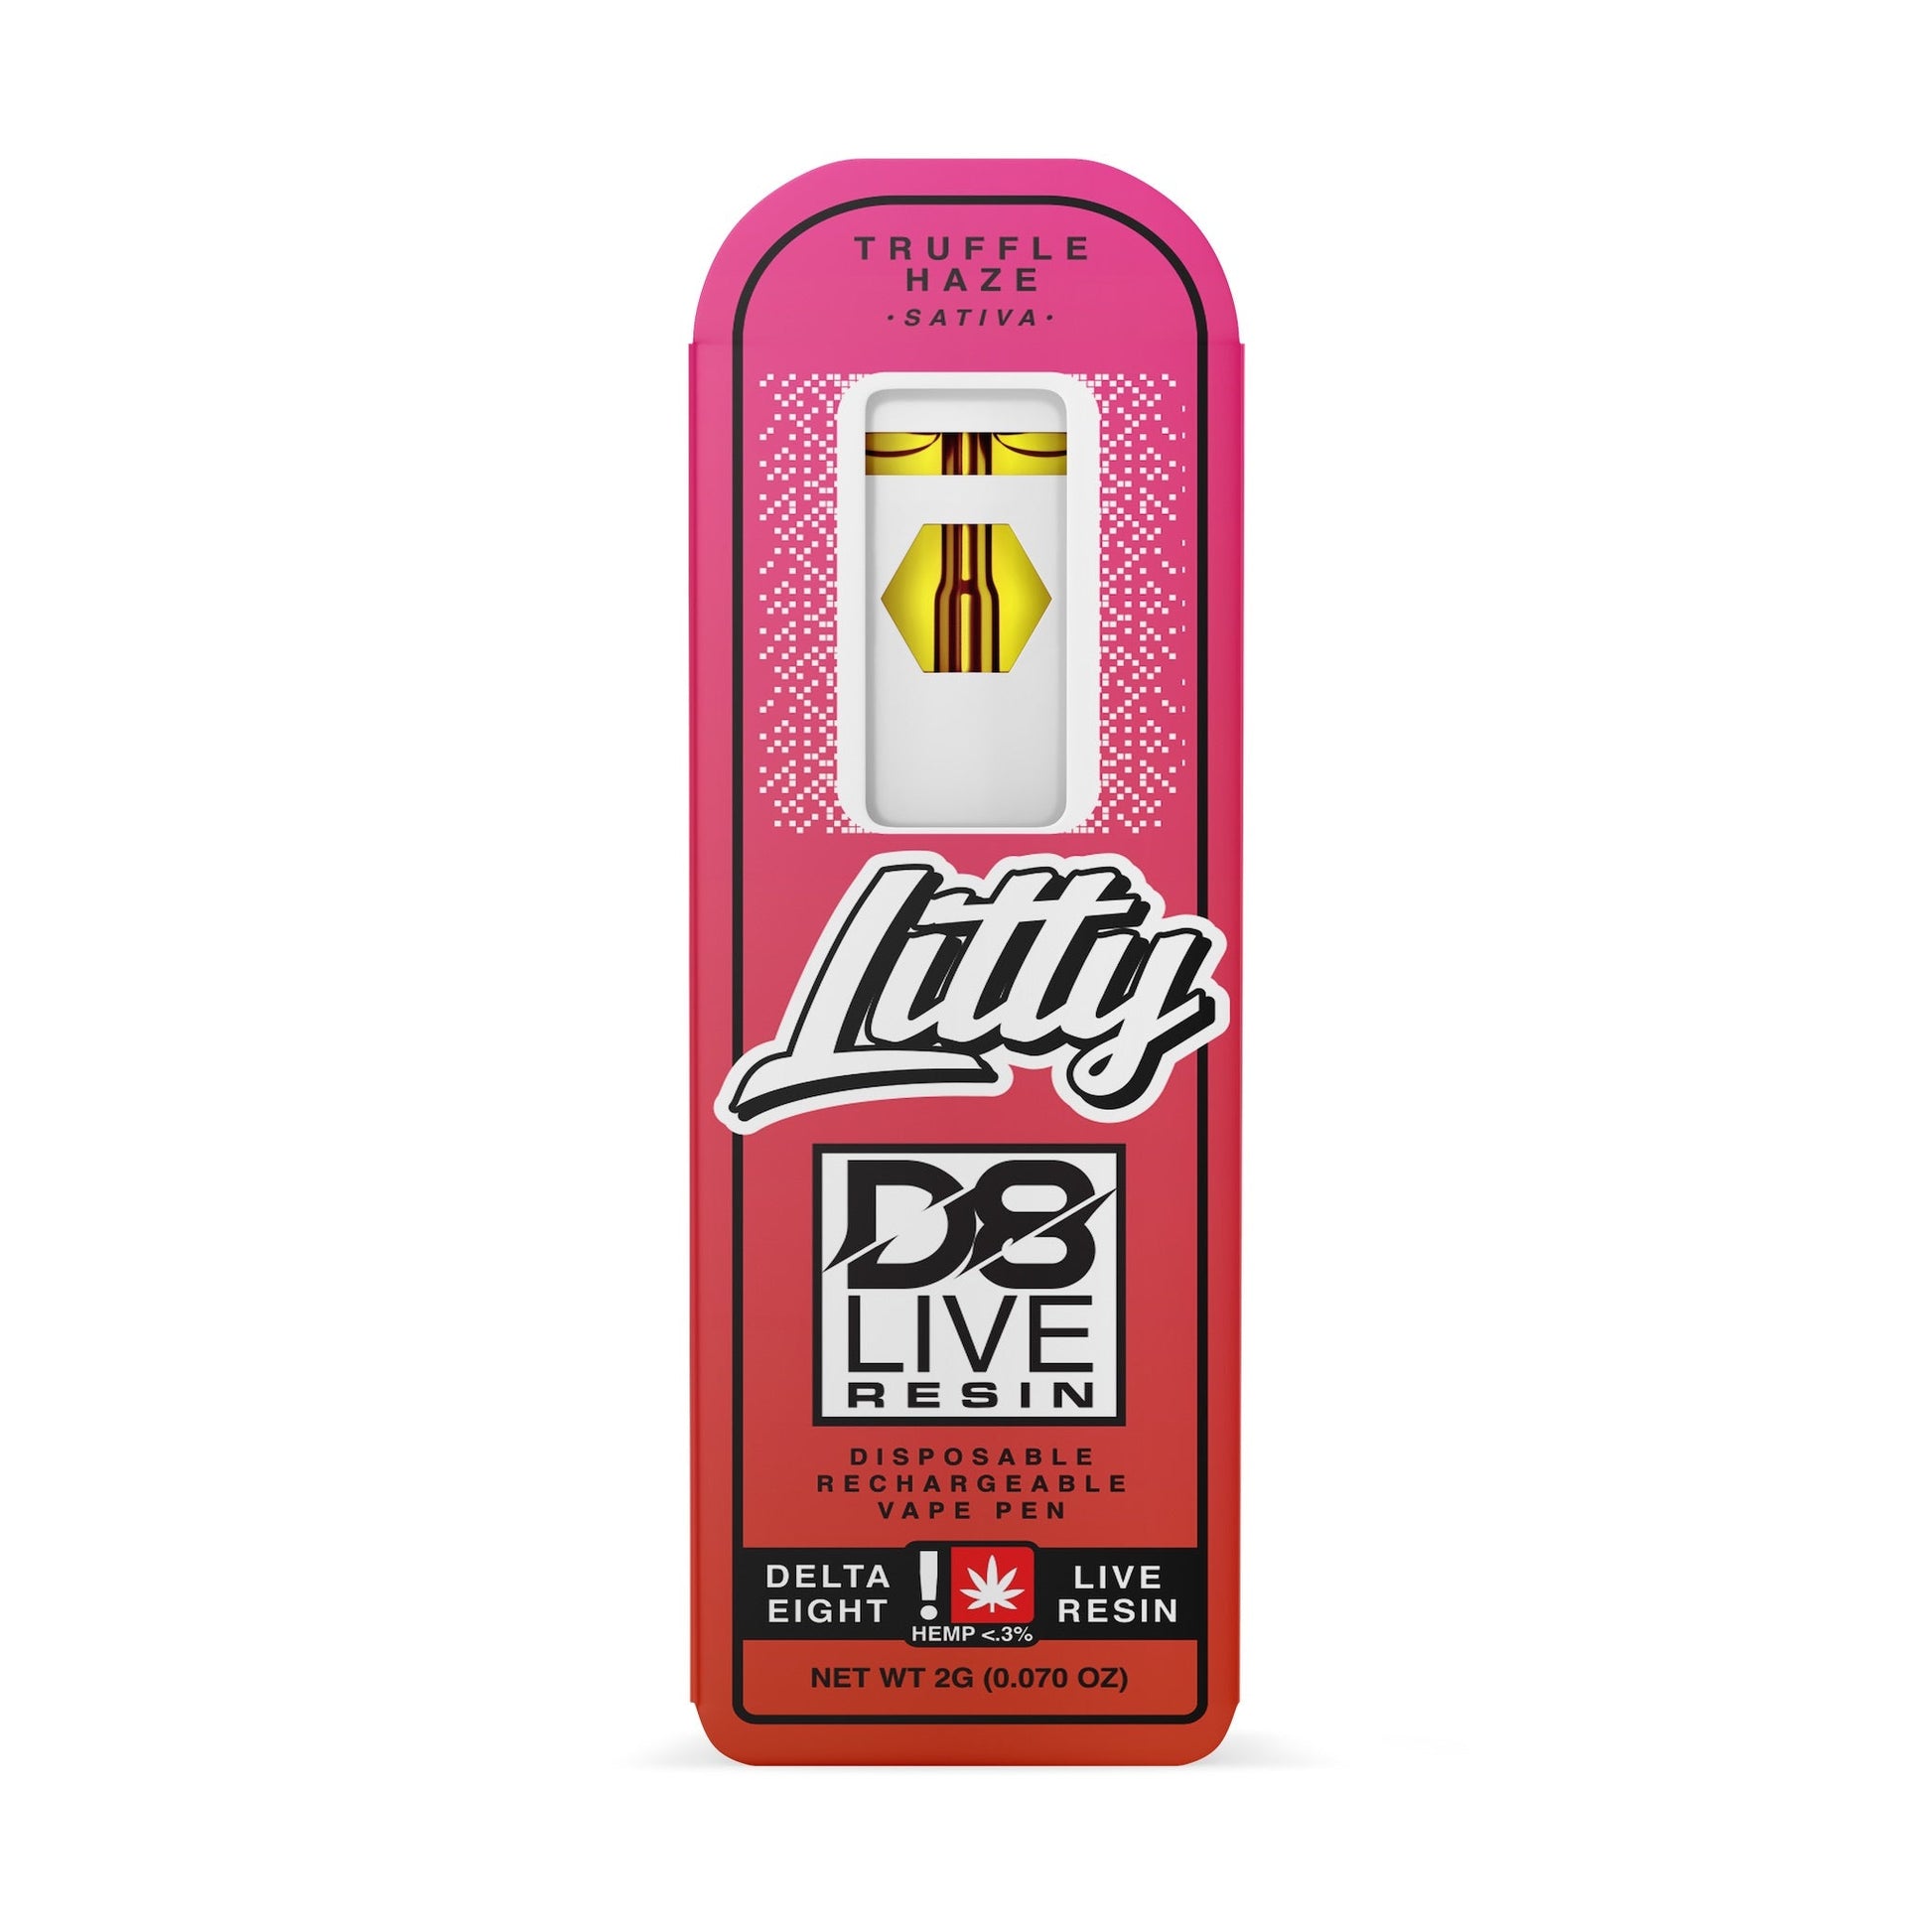 Litty Delta 8 Live Resin Vaporizer - 2000mg Truffle Haze